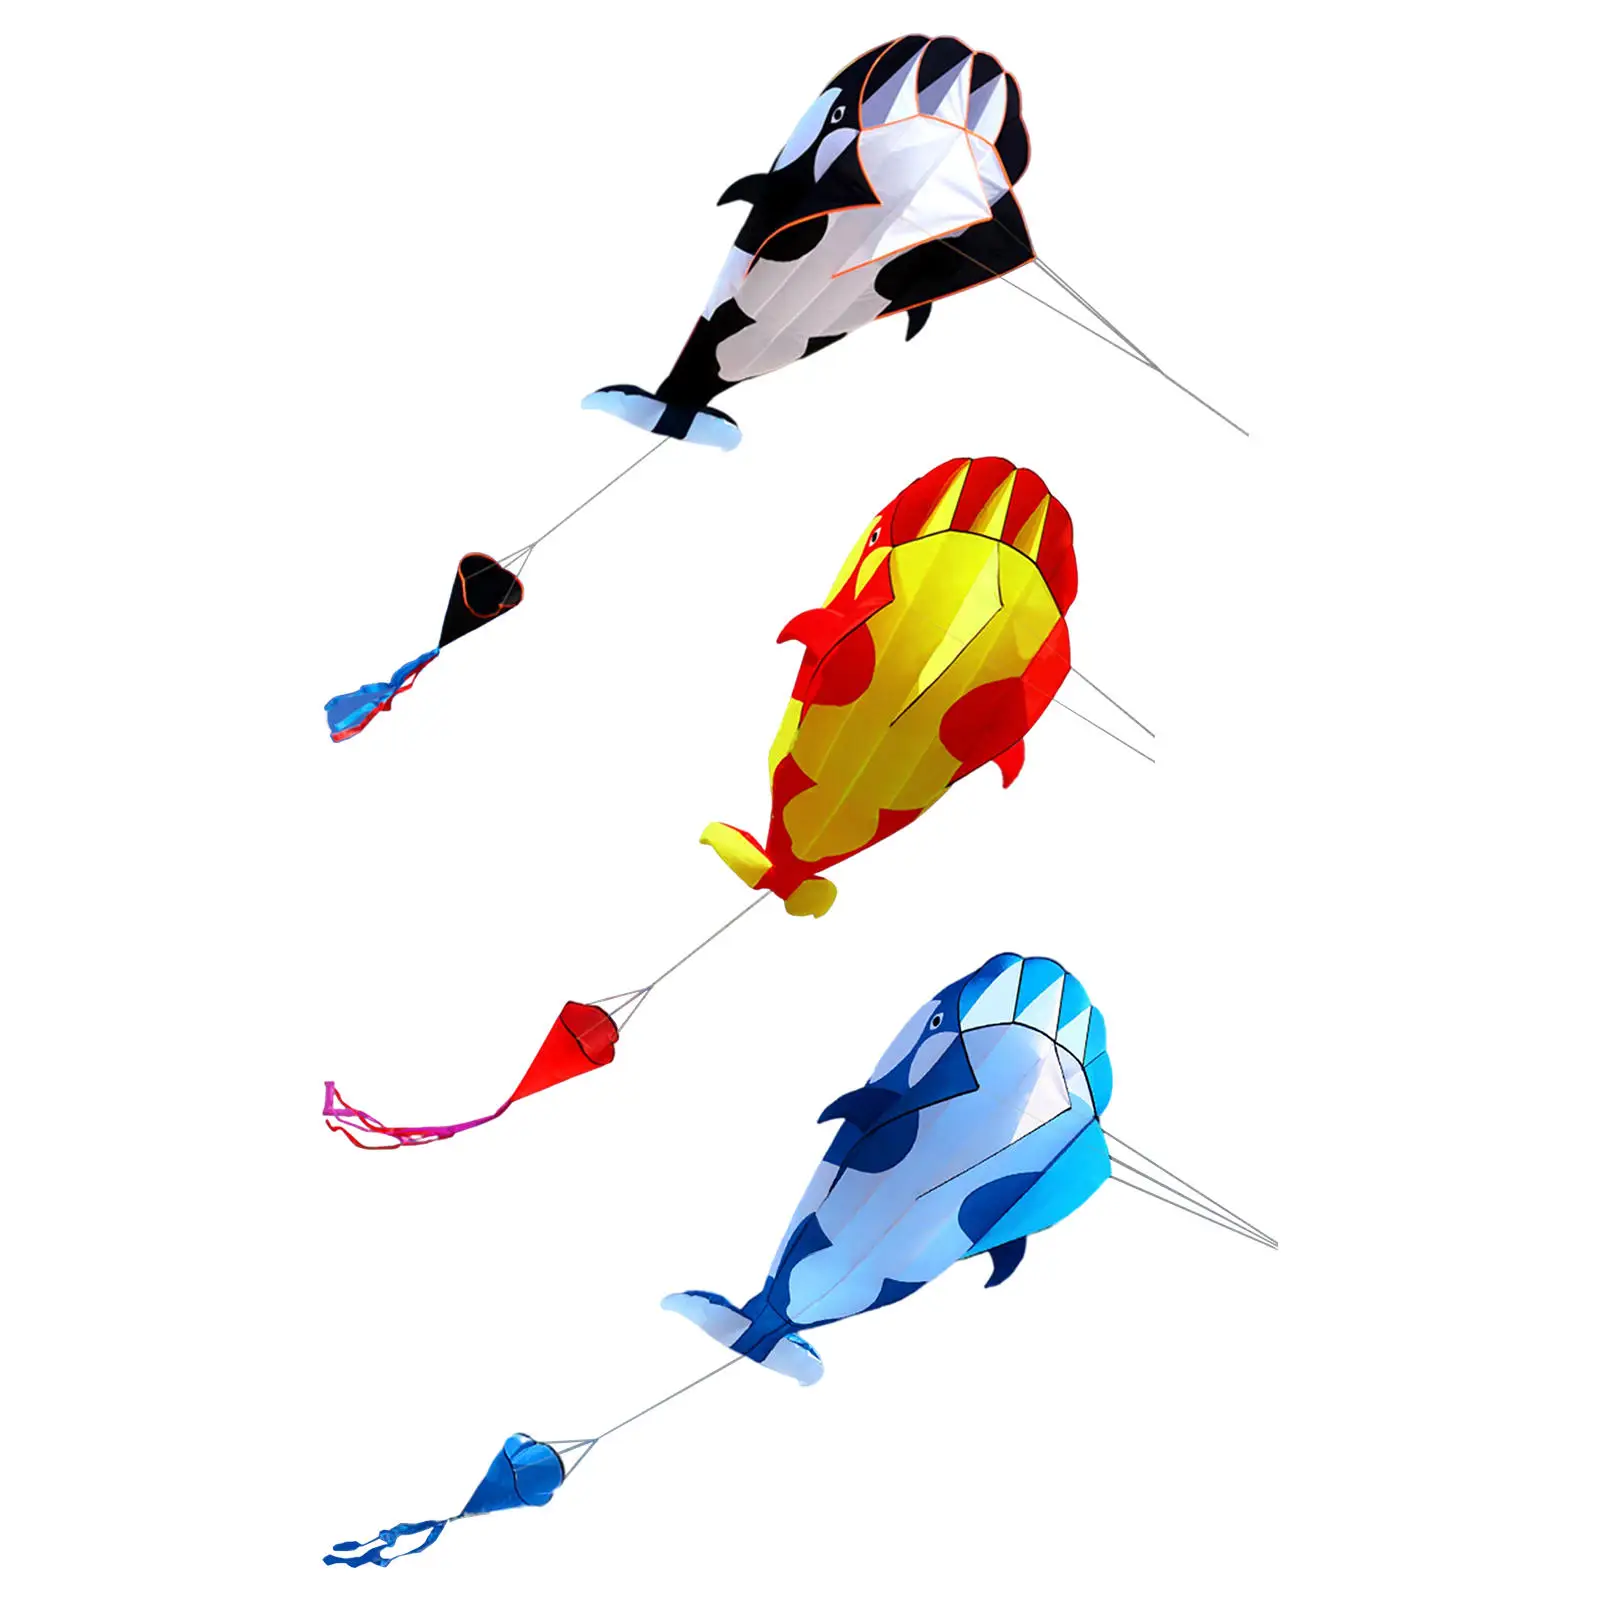 Soft Killer Whale Kite with 30M Kites String Flying Kites Parafoil Beach Kite Large for Outdoor Entertainment